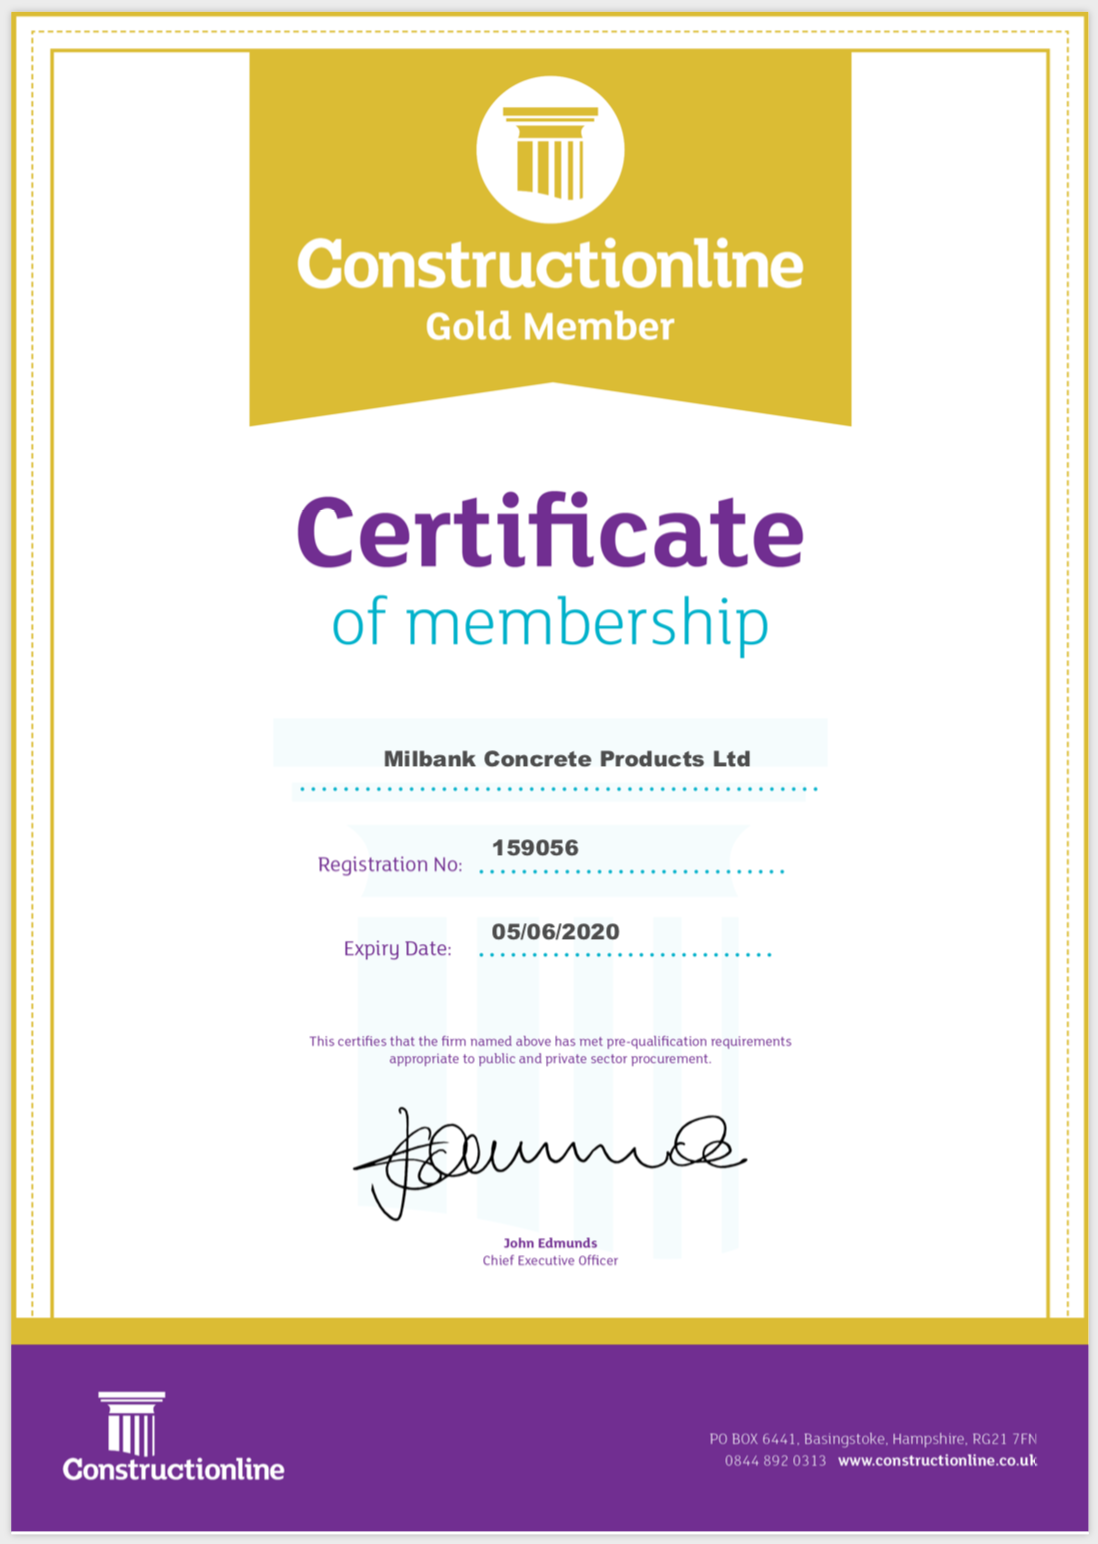 Constructionline gold certificate